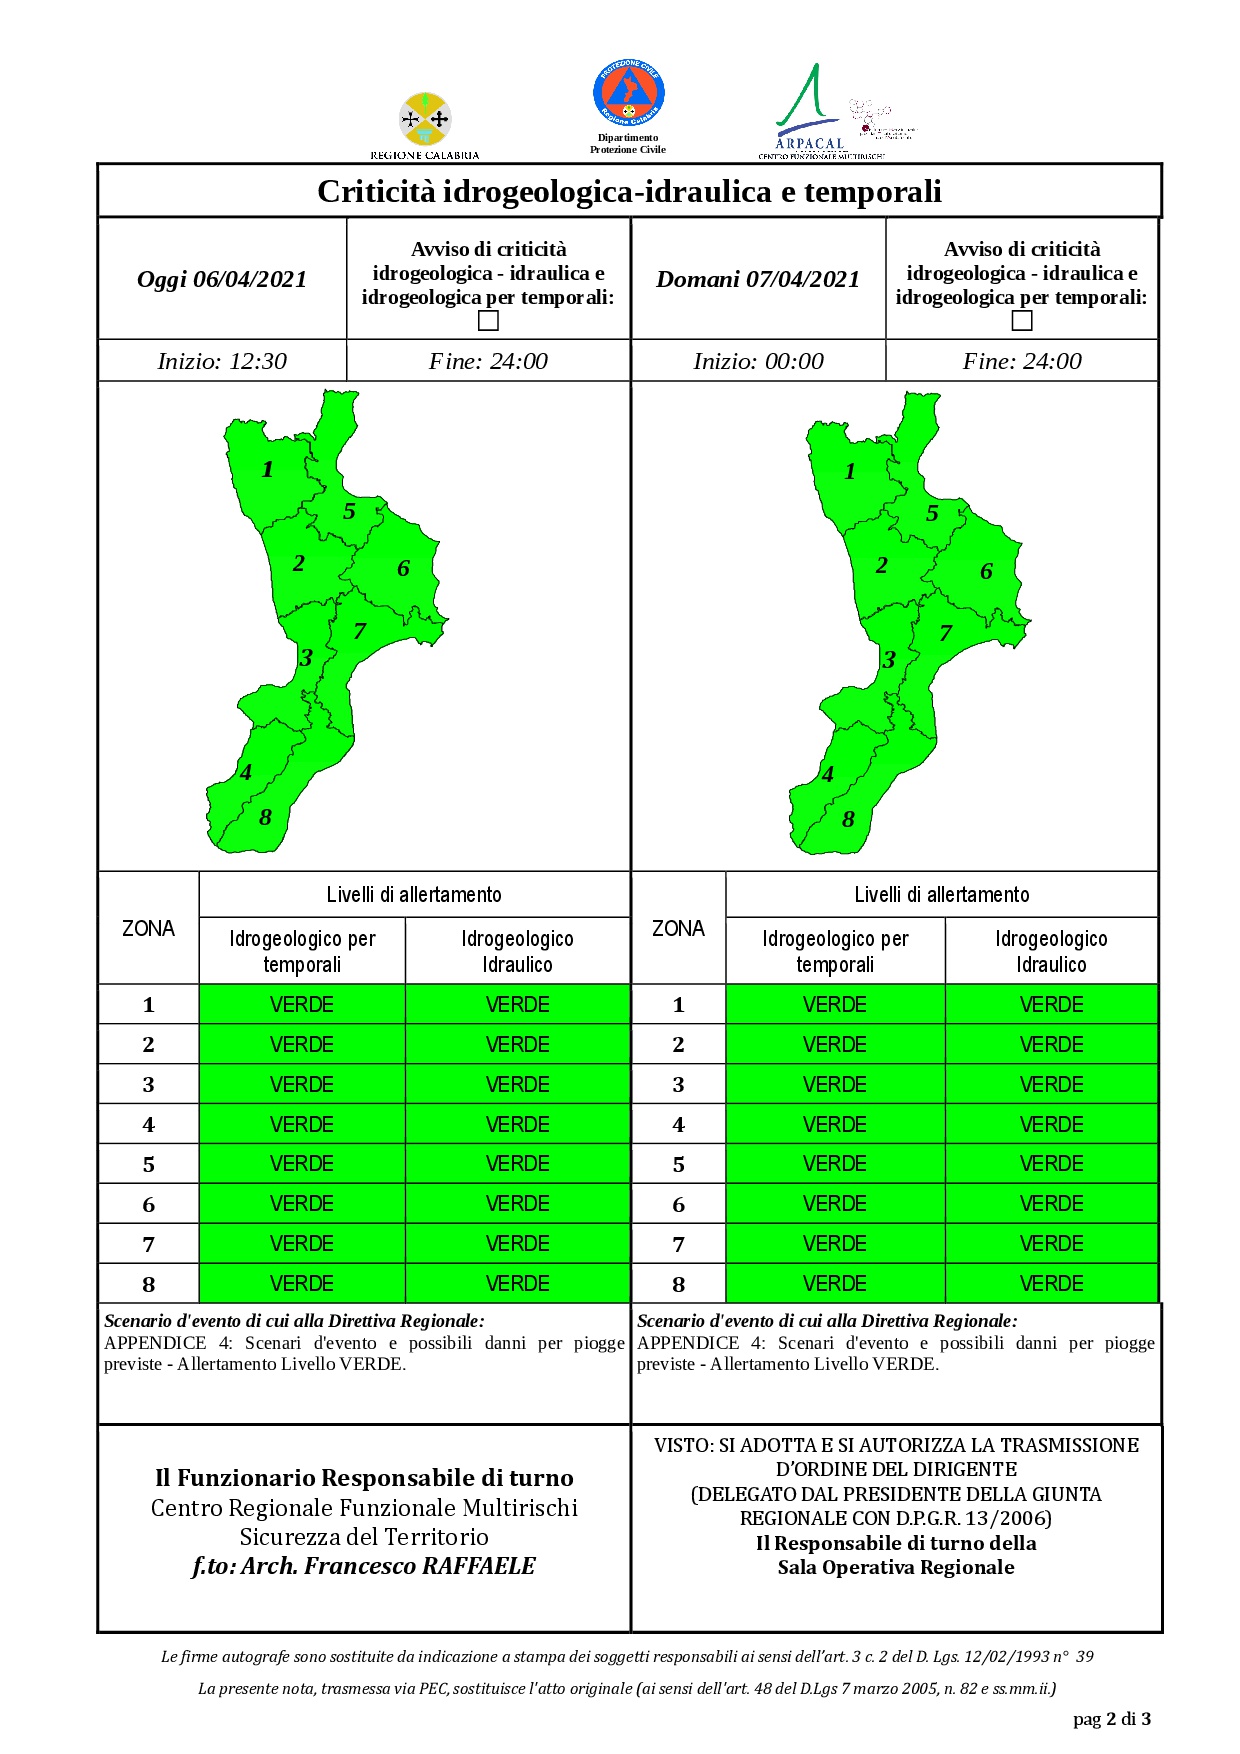 Criticità idrogeologica-idraulica e temporali in Calabria 06-04-2021